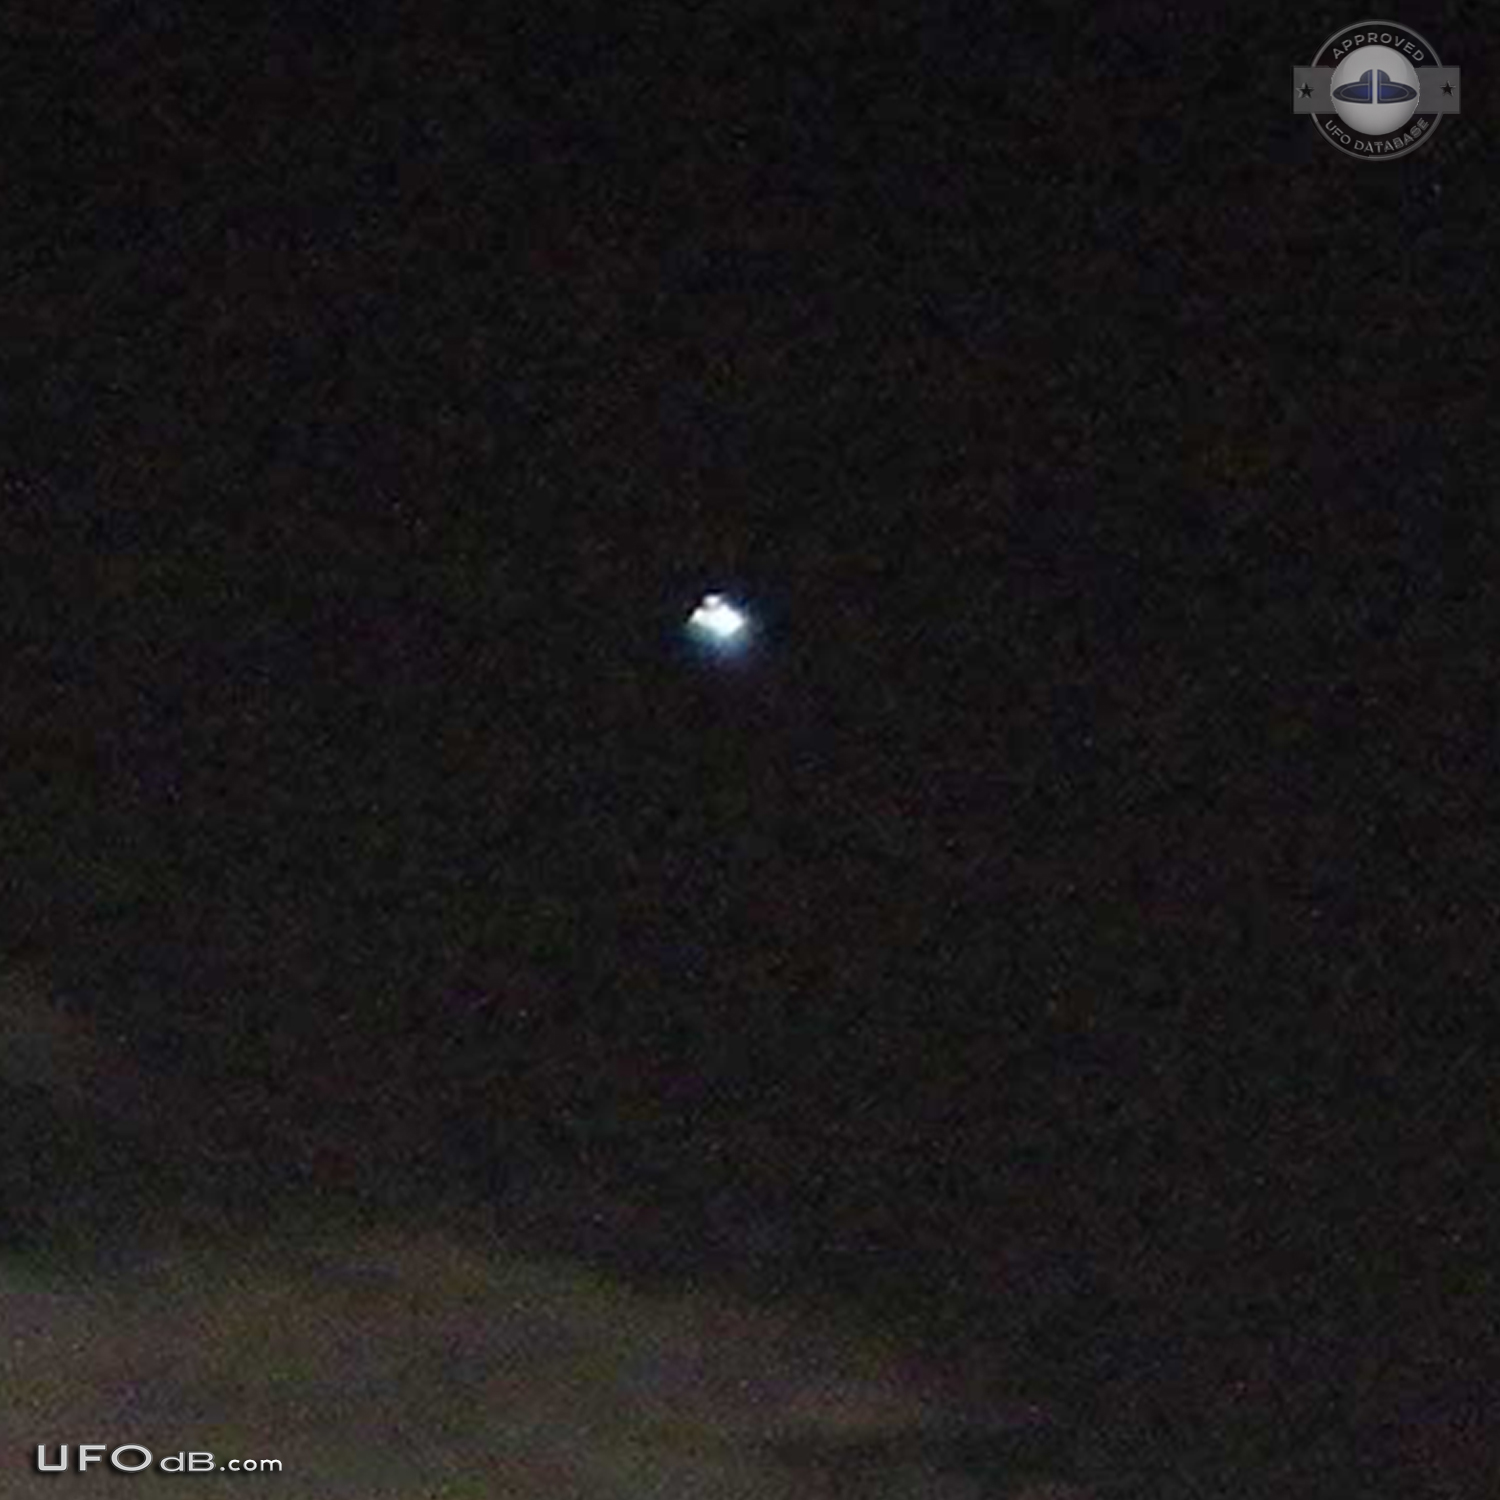 Moon picture reveals bright UFO in the night sky in Ecuador in 2009 UFO Picture #446-3